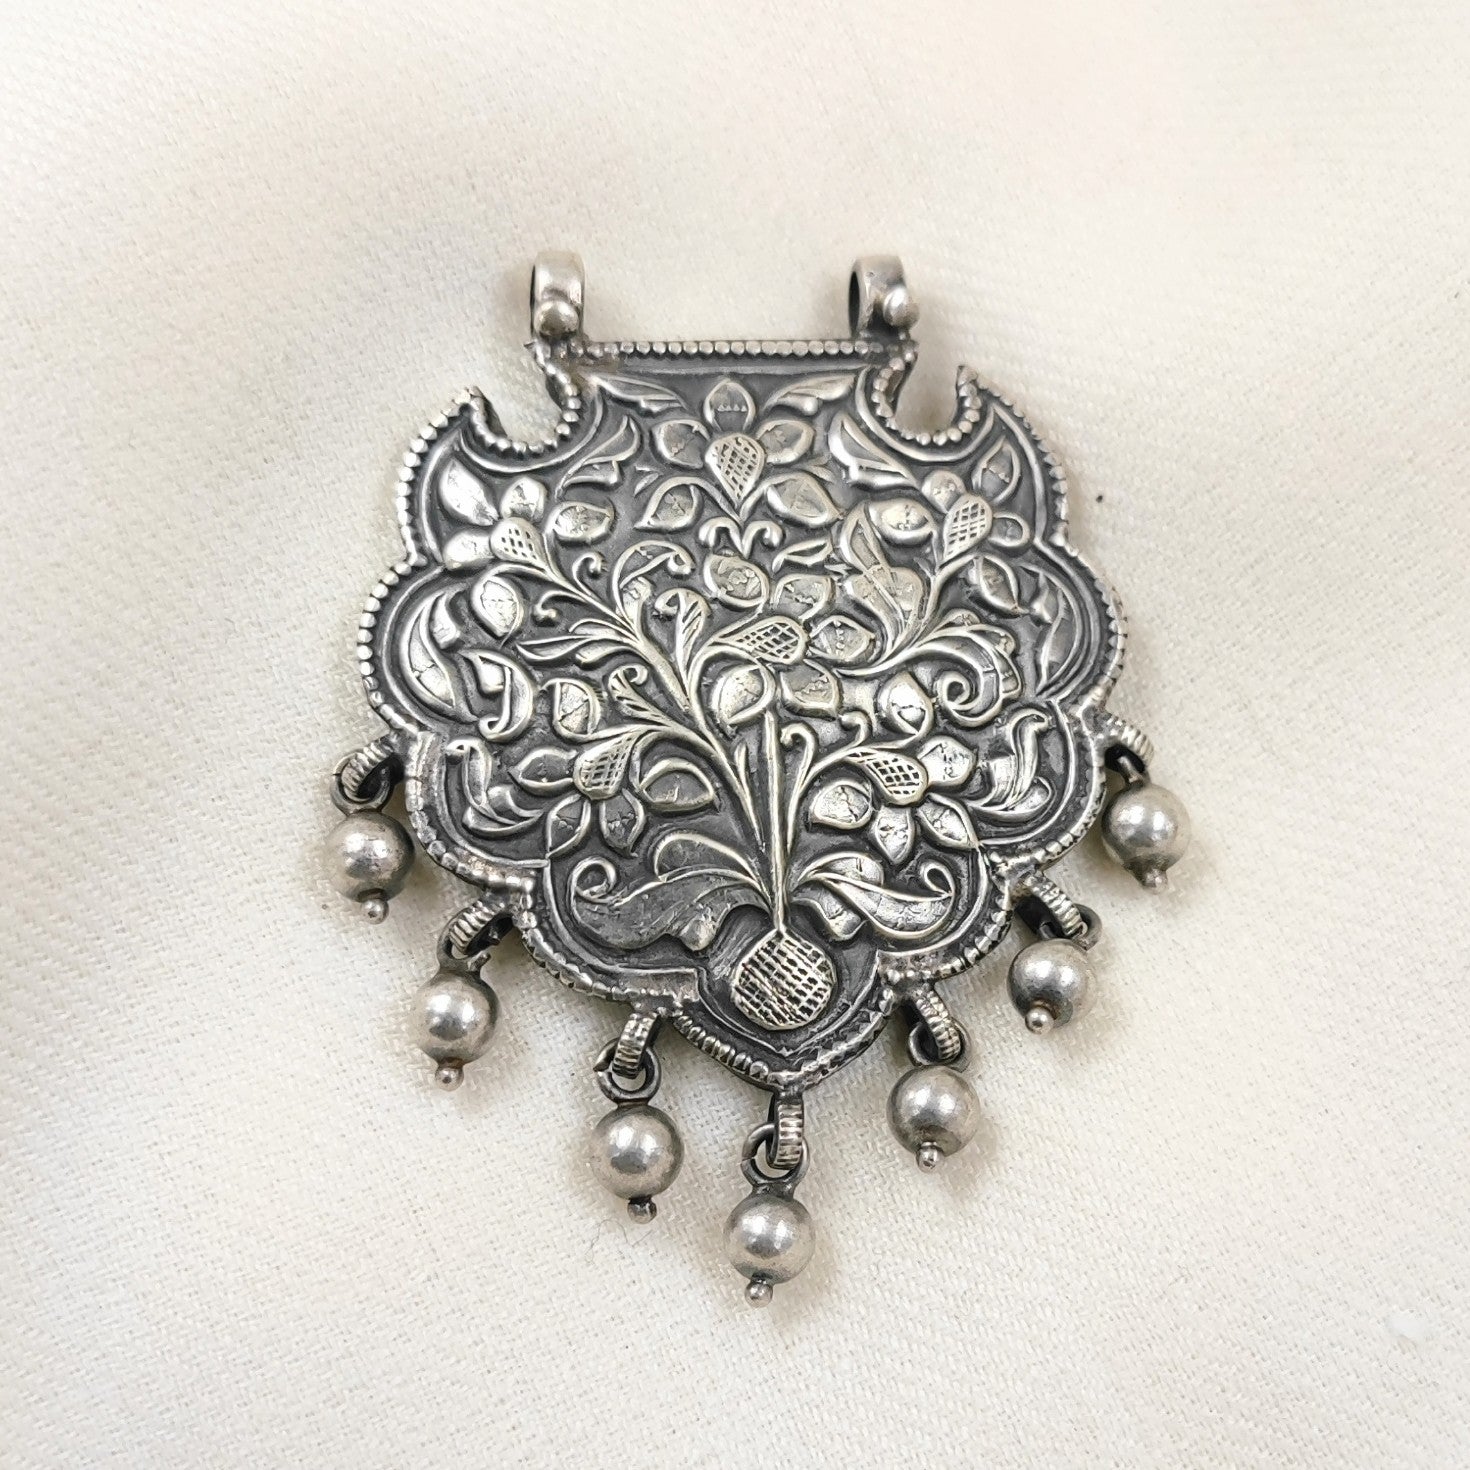 Silver Jewelry Pendant by Jauhri 92.5 Silver - Chinha Pendant